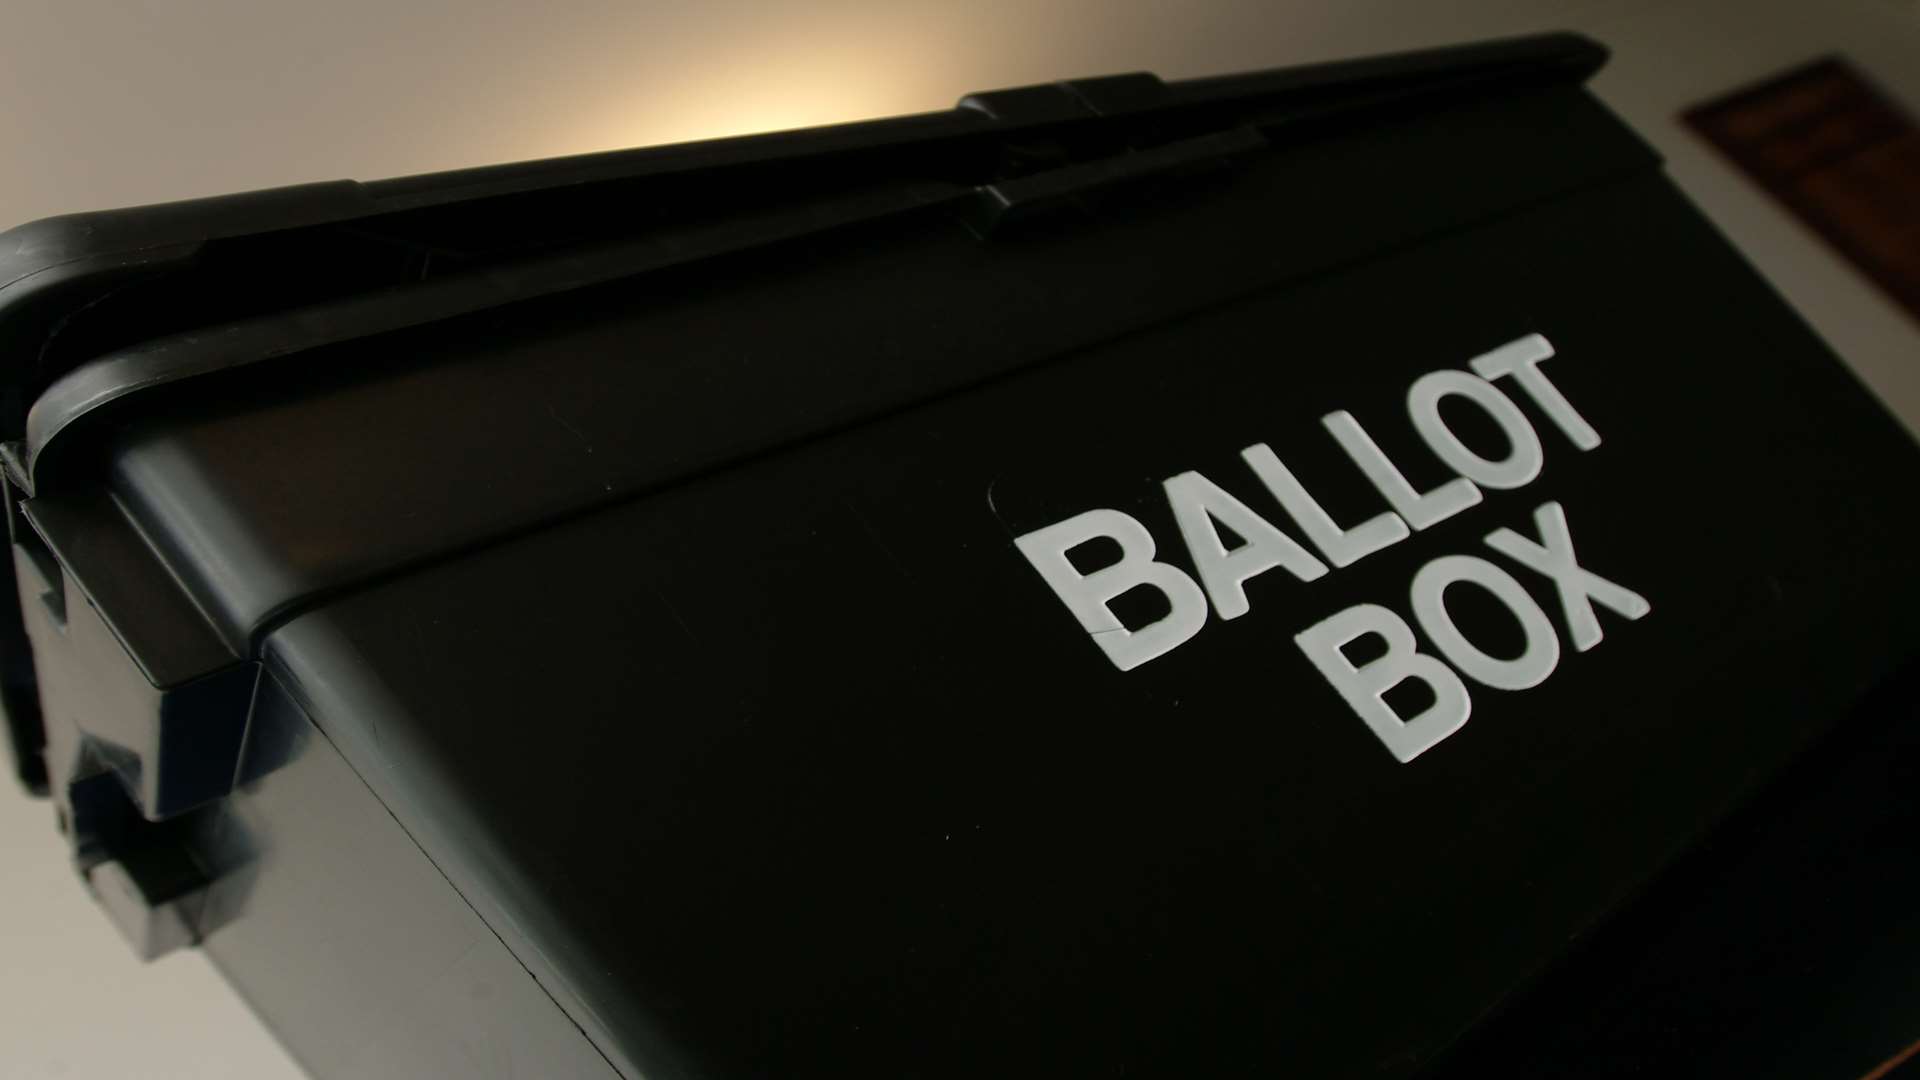 Ballot box